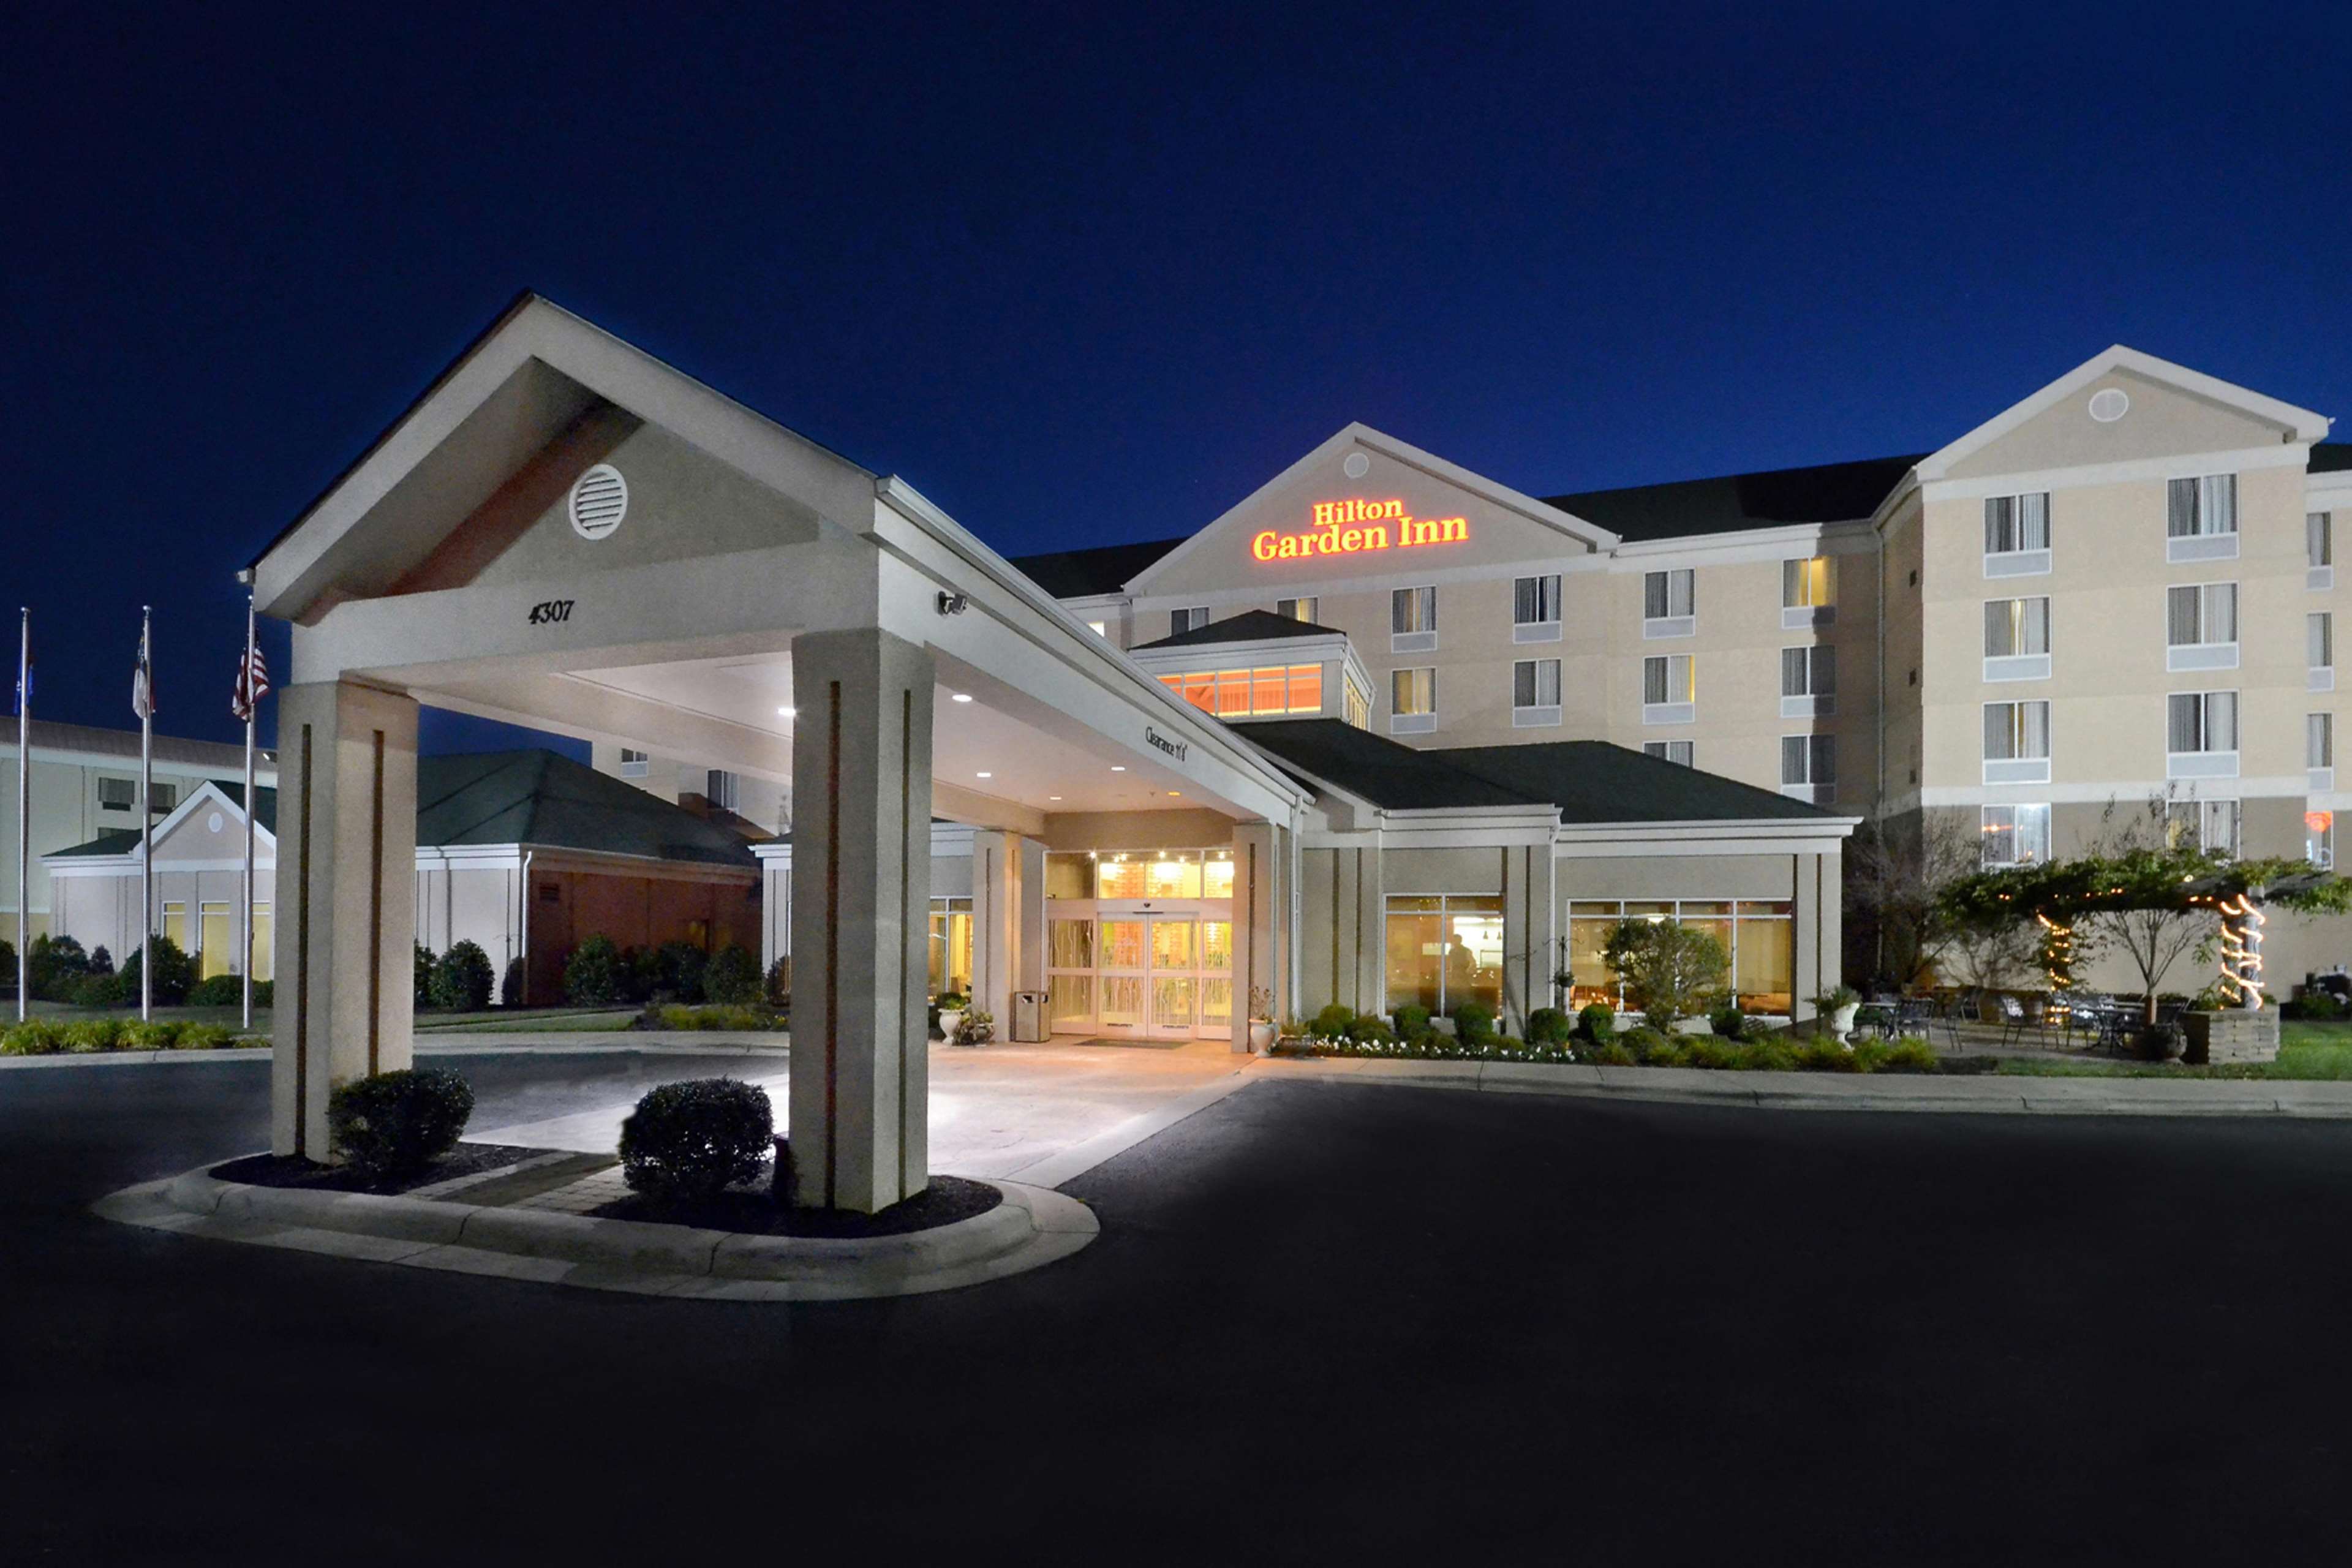 Hilton Garden Inn Greensboro 4307 Big Tree Way Greensboro Nc Hotels